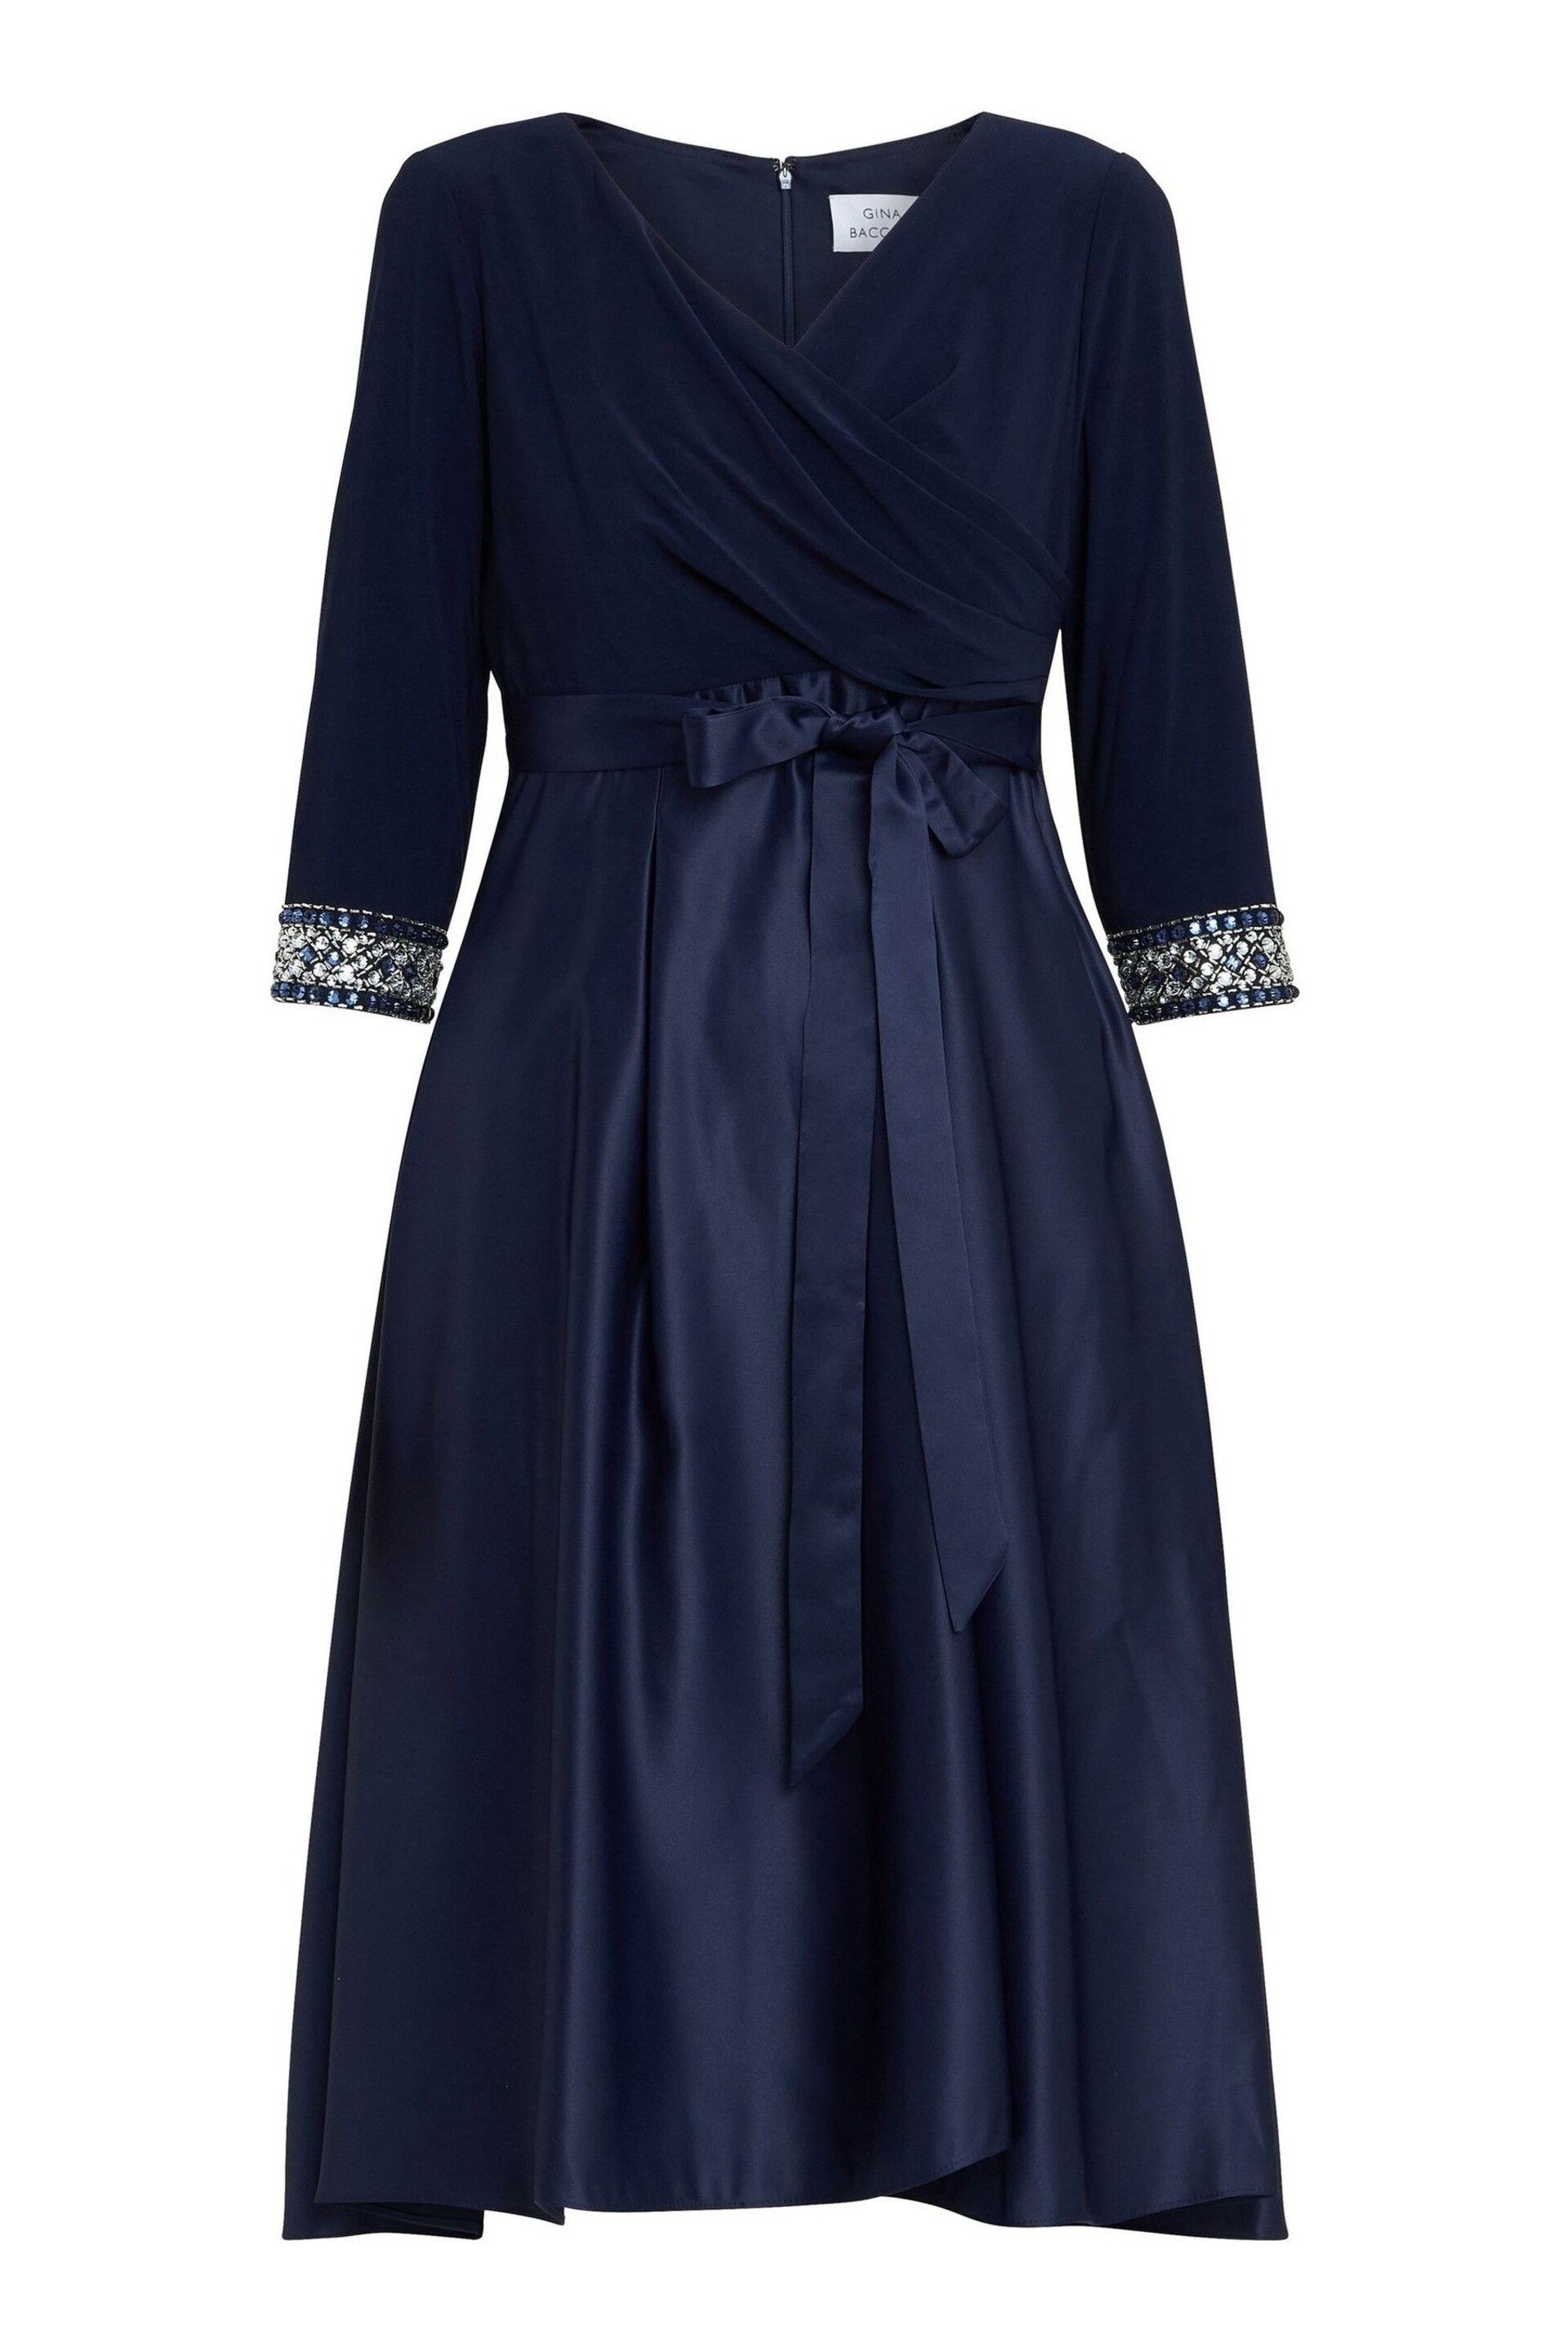 Gina Bacconi Blue Doris Petite Midi High Low Dress With Tie Belt - Image 5 of 5